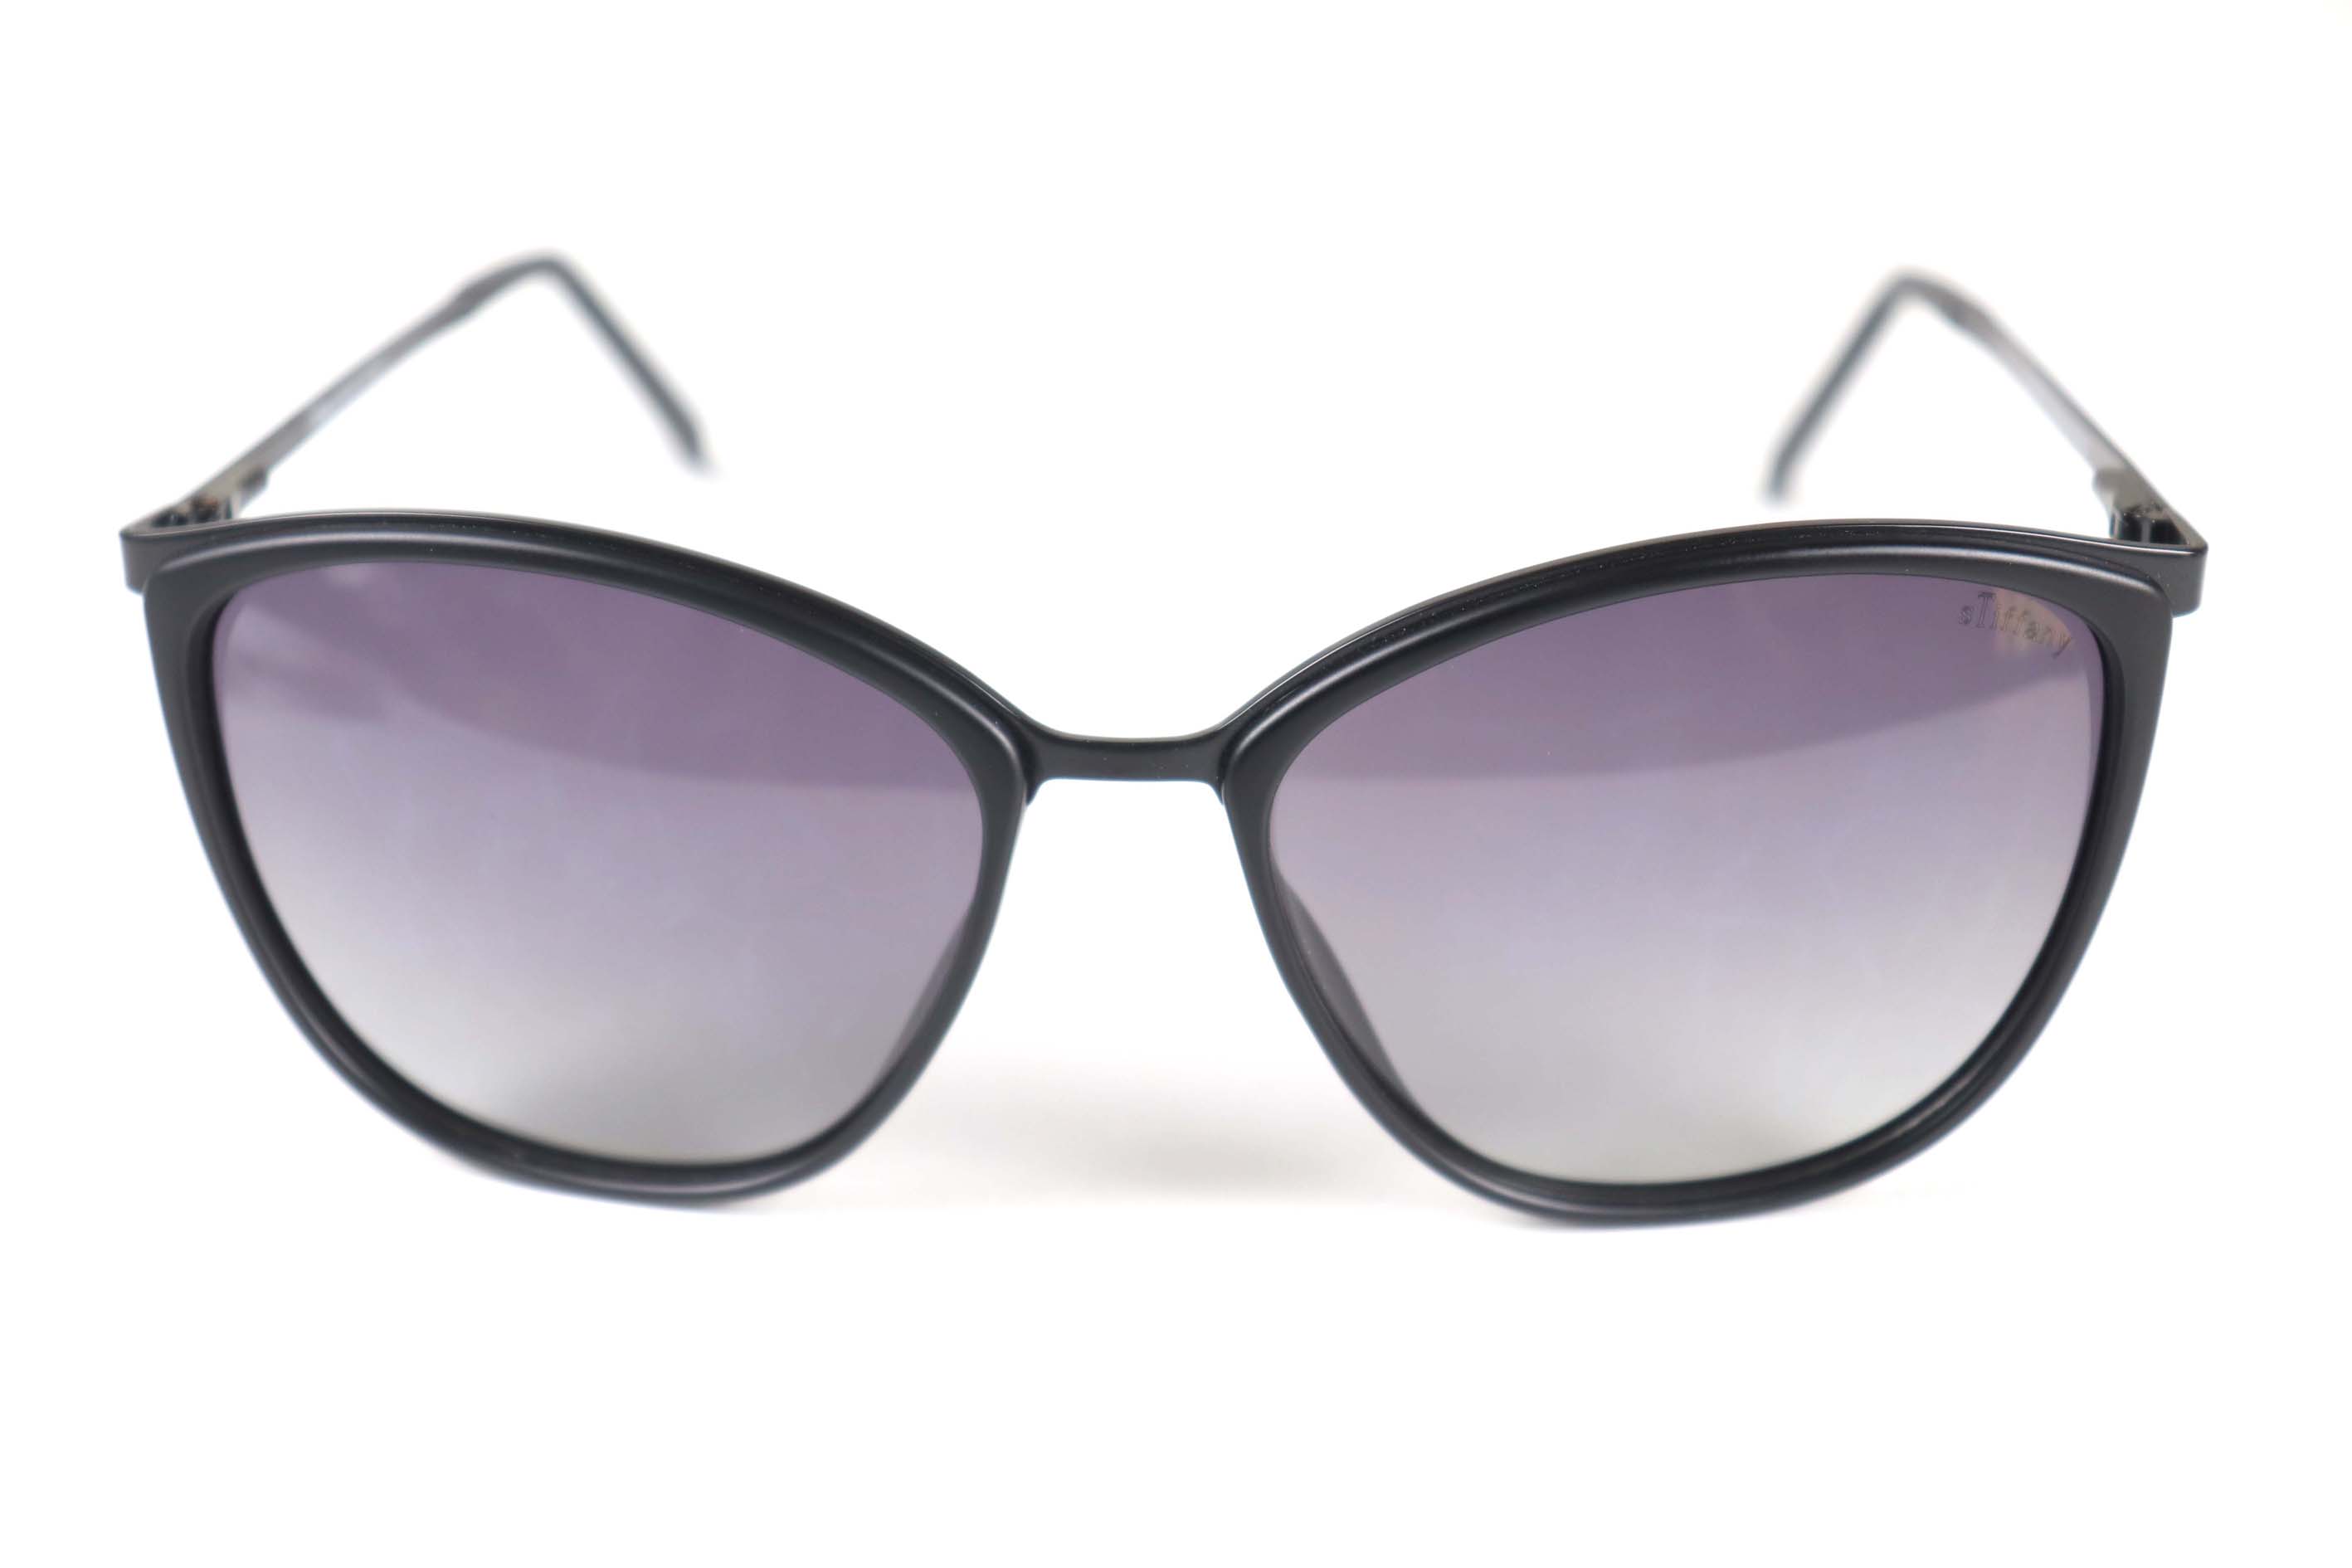 Stiffany Sunglasses-OR-GSA8017-C3-S